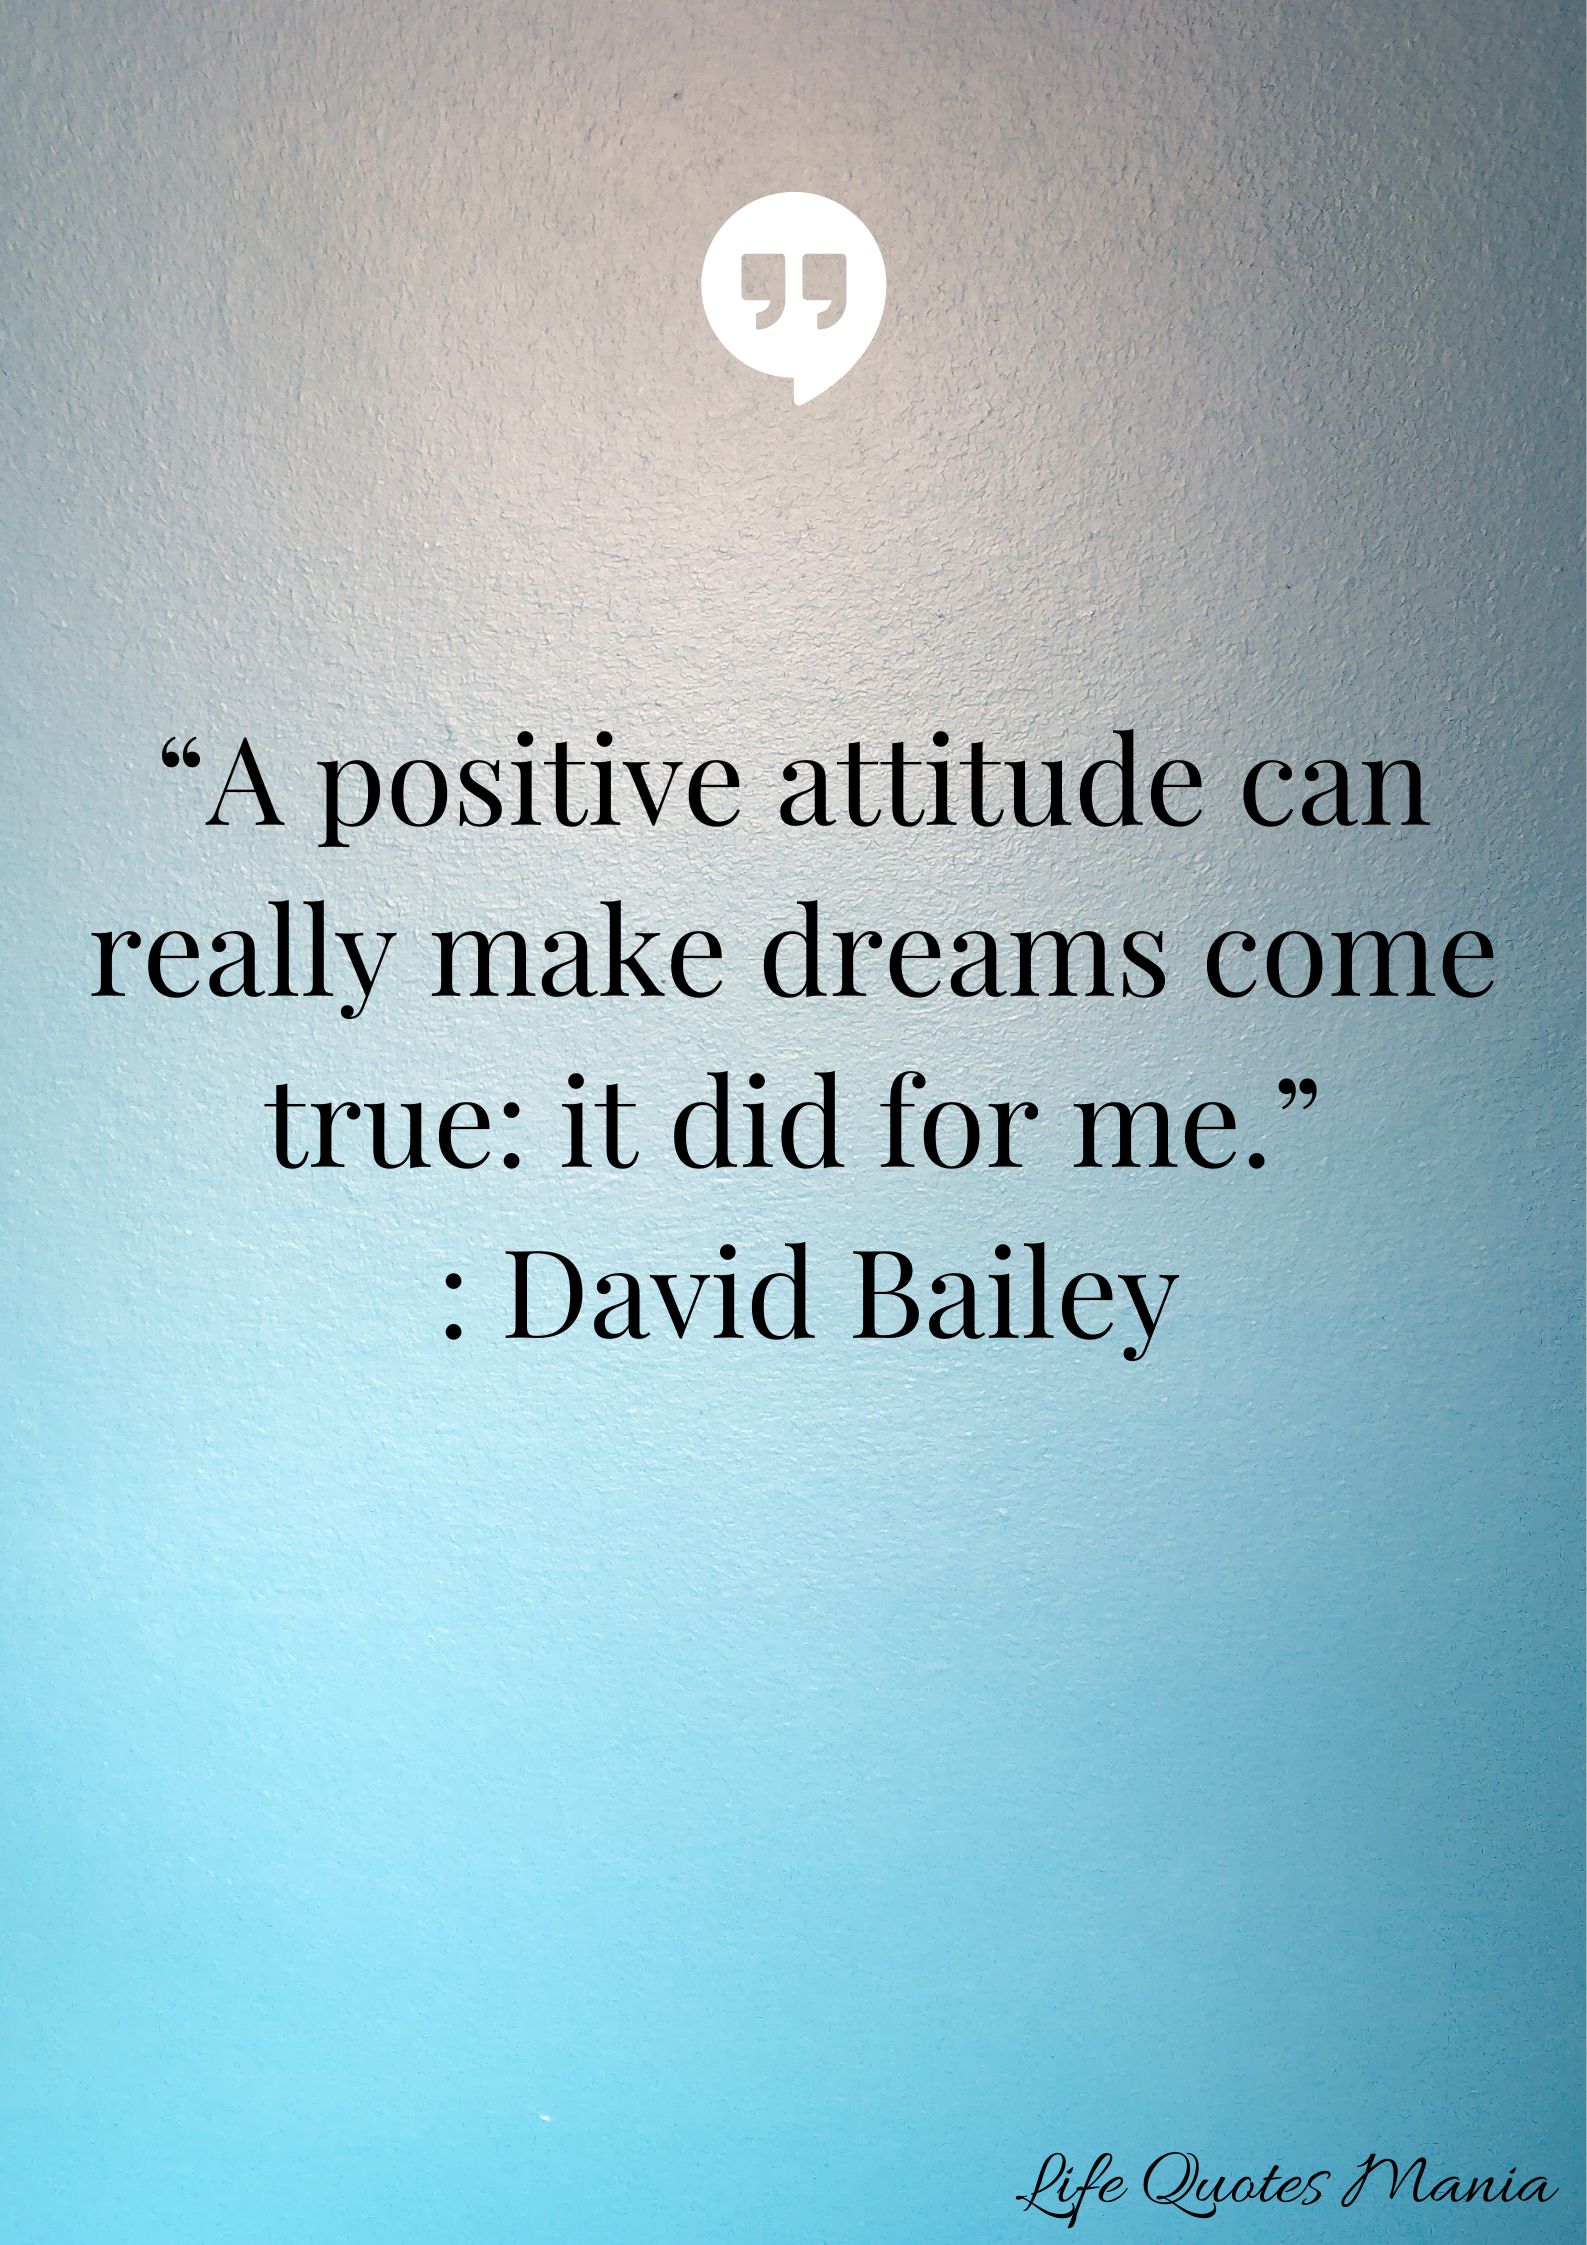 Attitude Quote - David Bailey